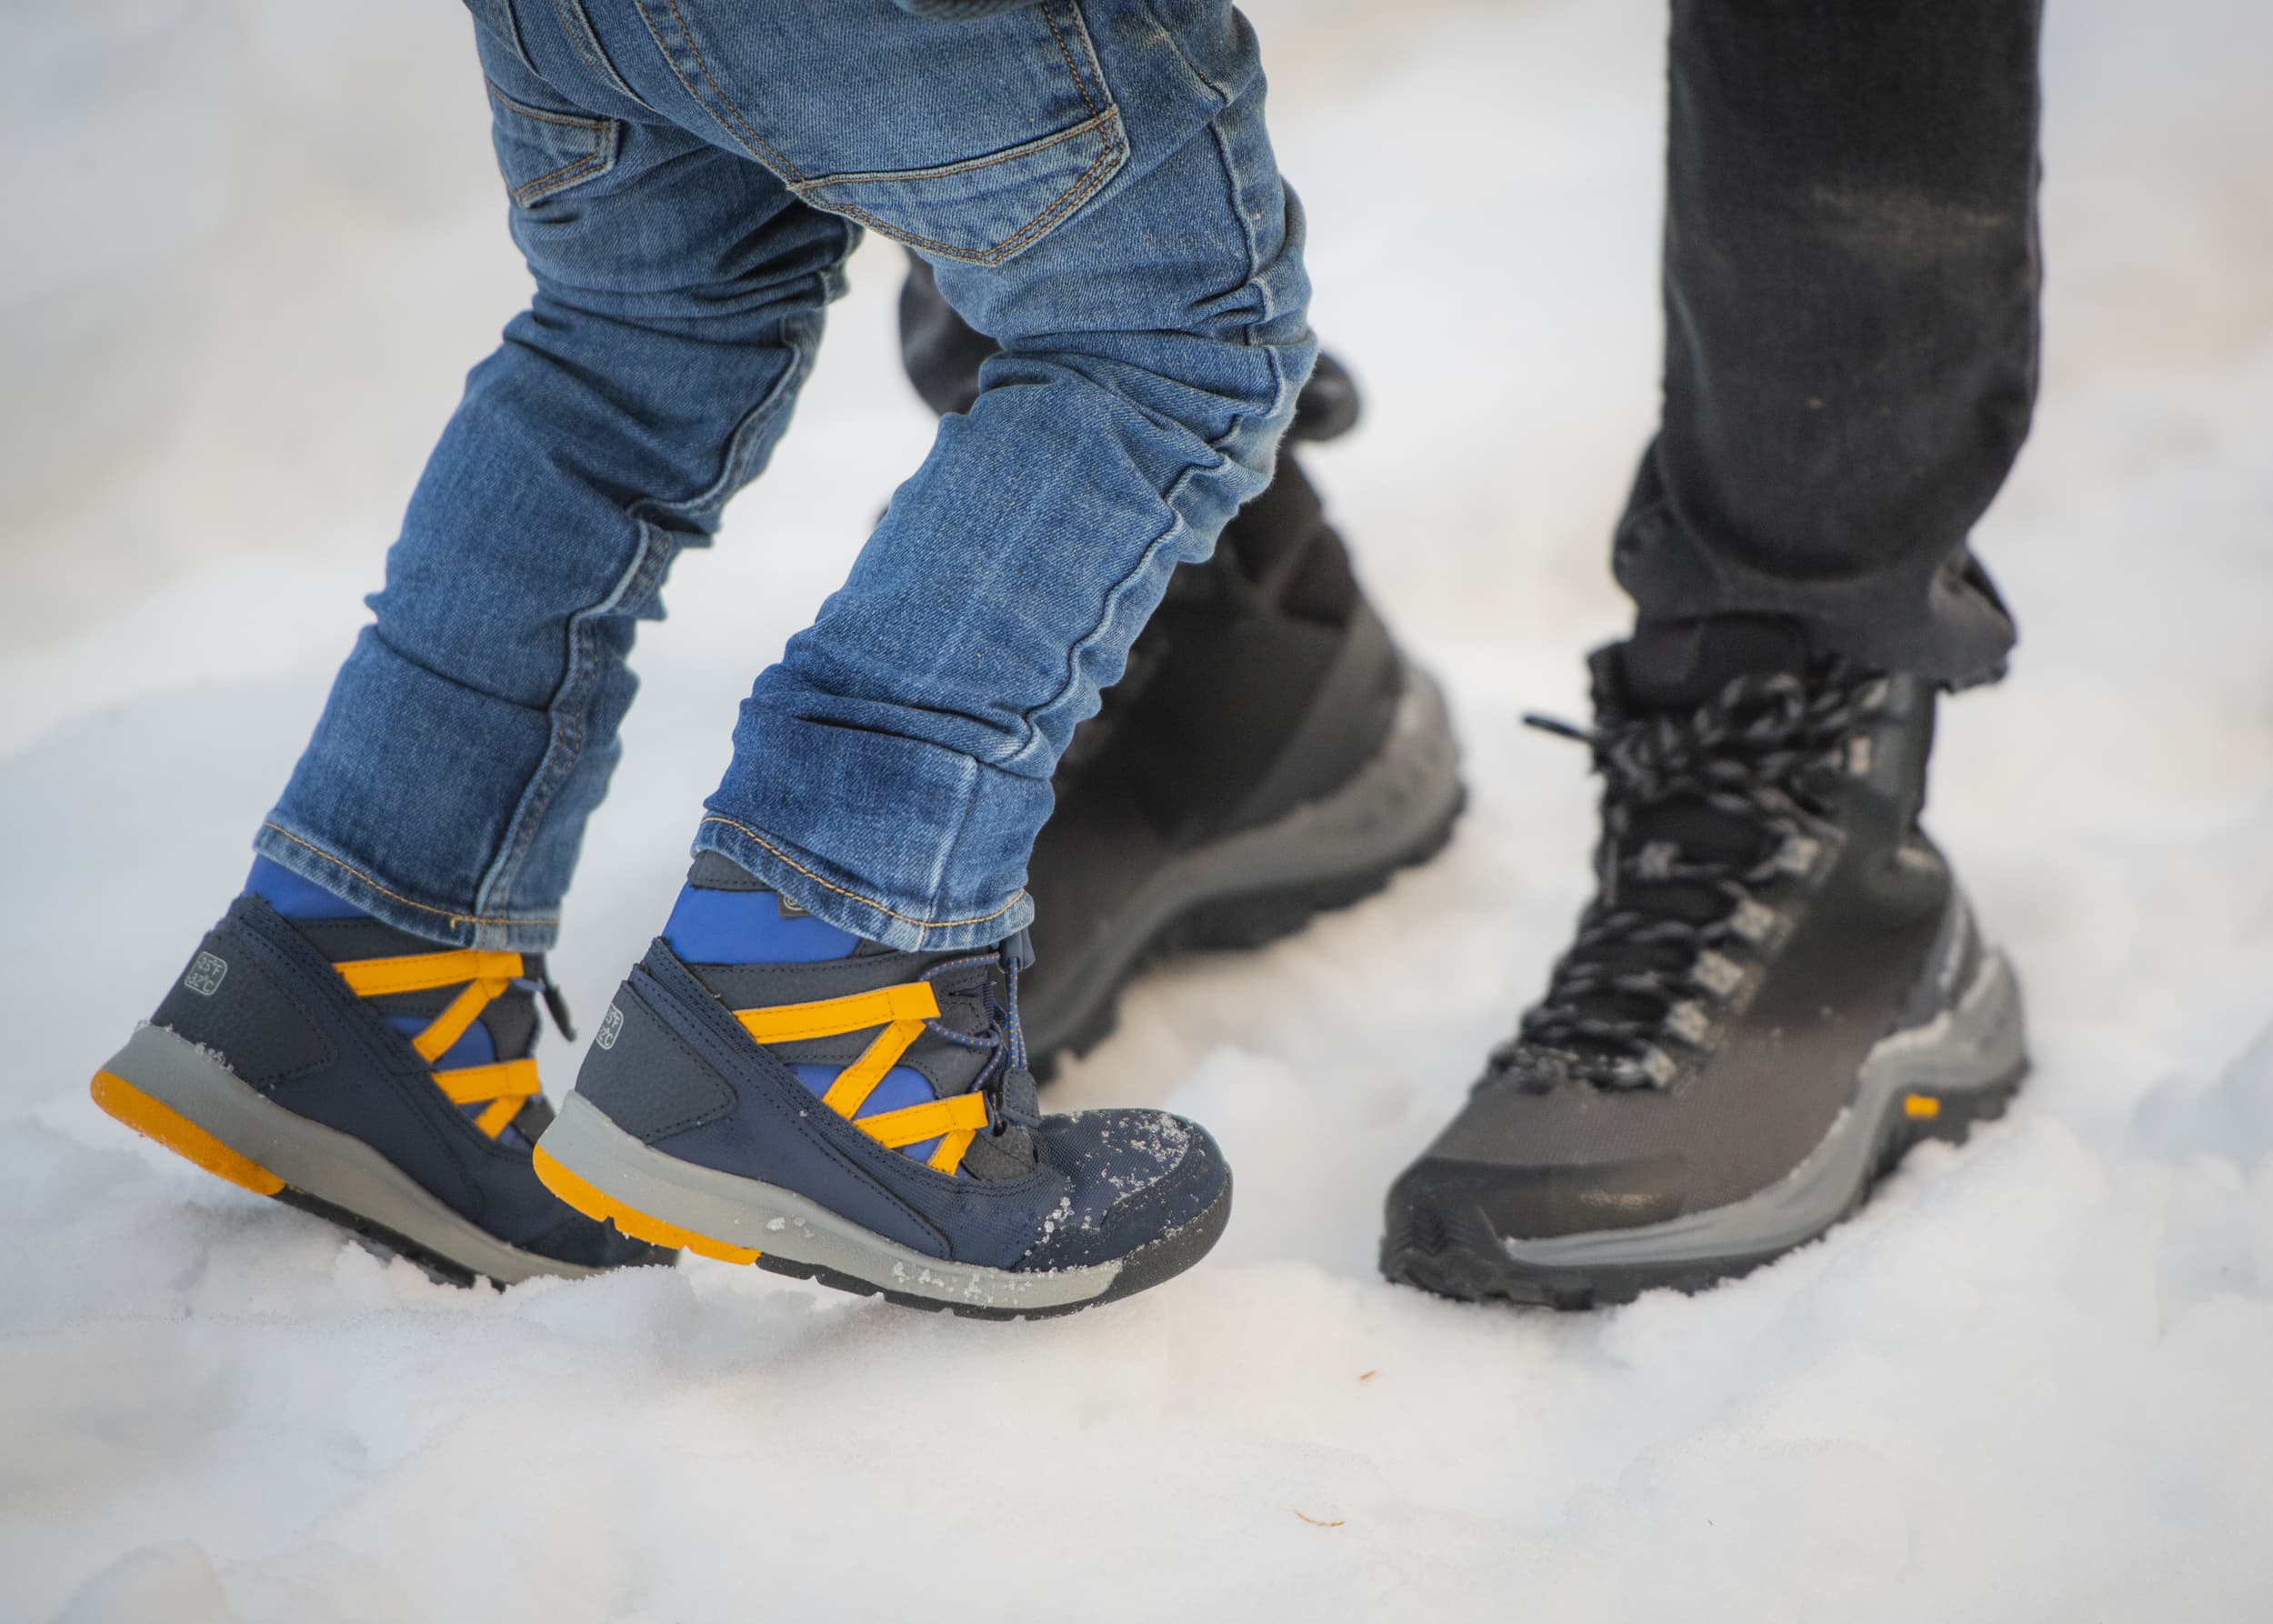 Children and women s merrell snow boots